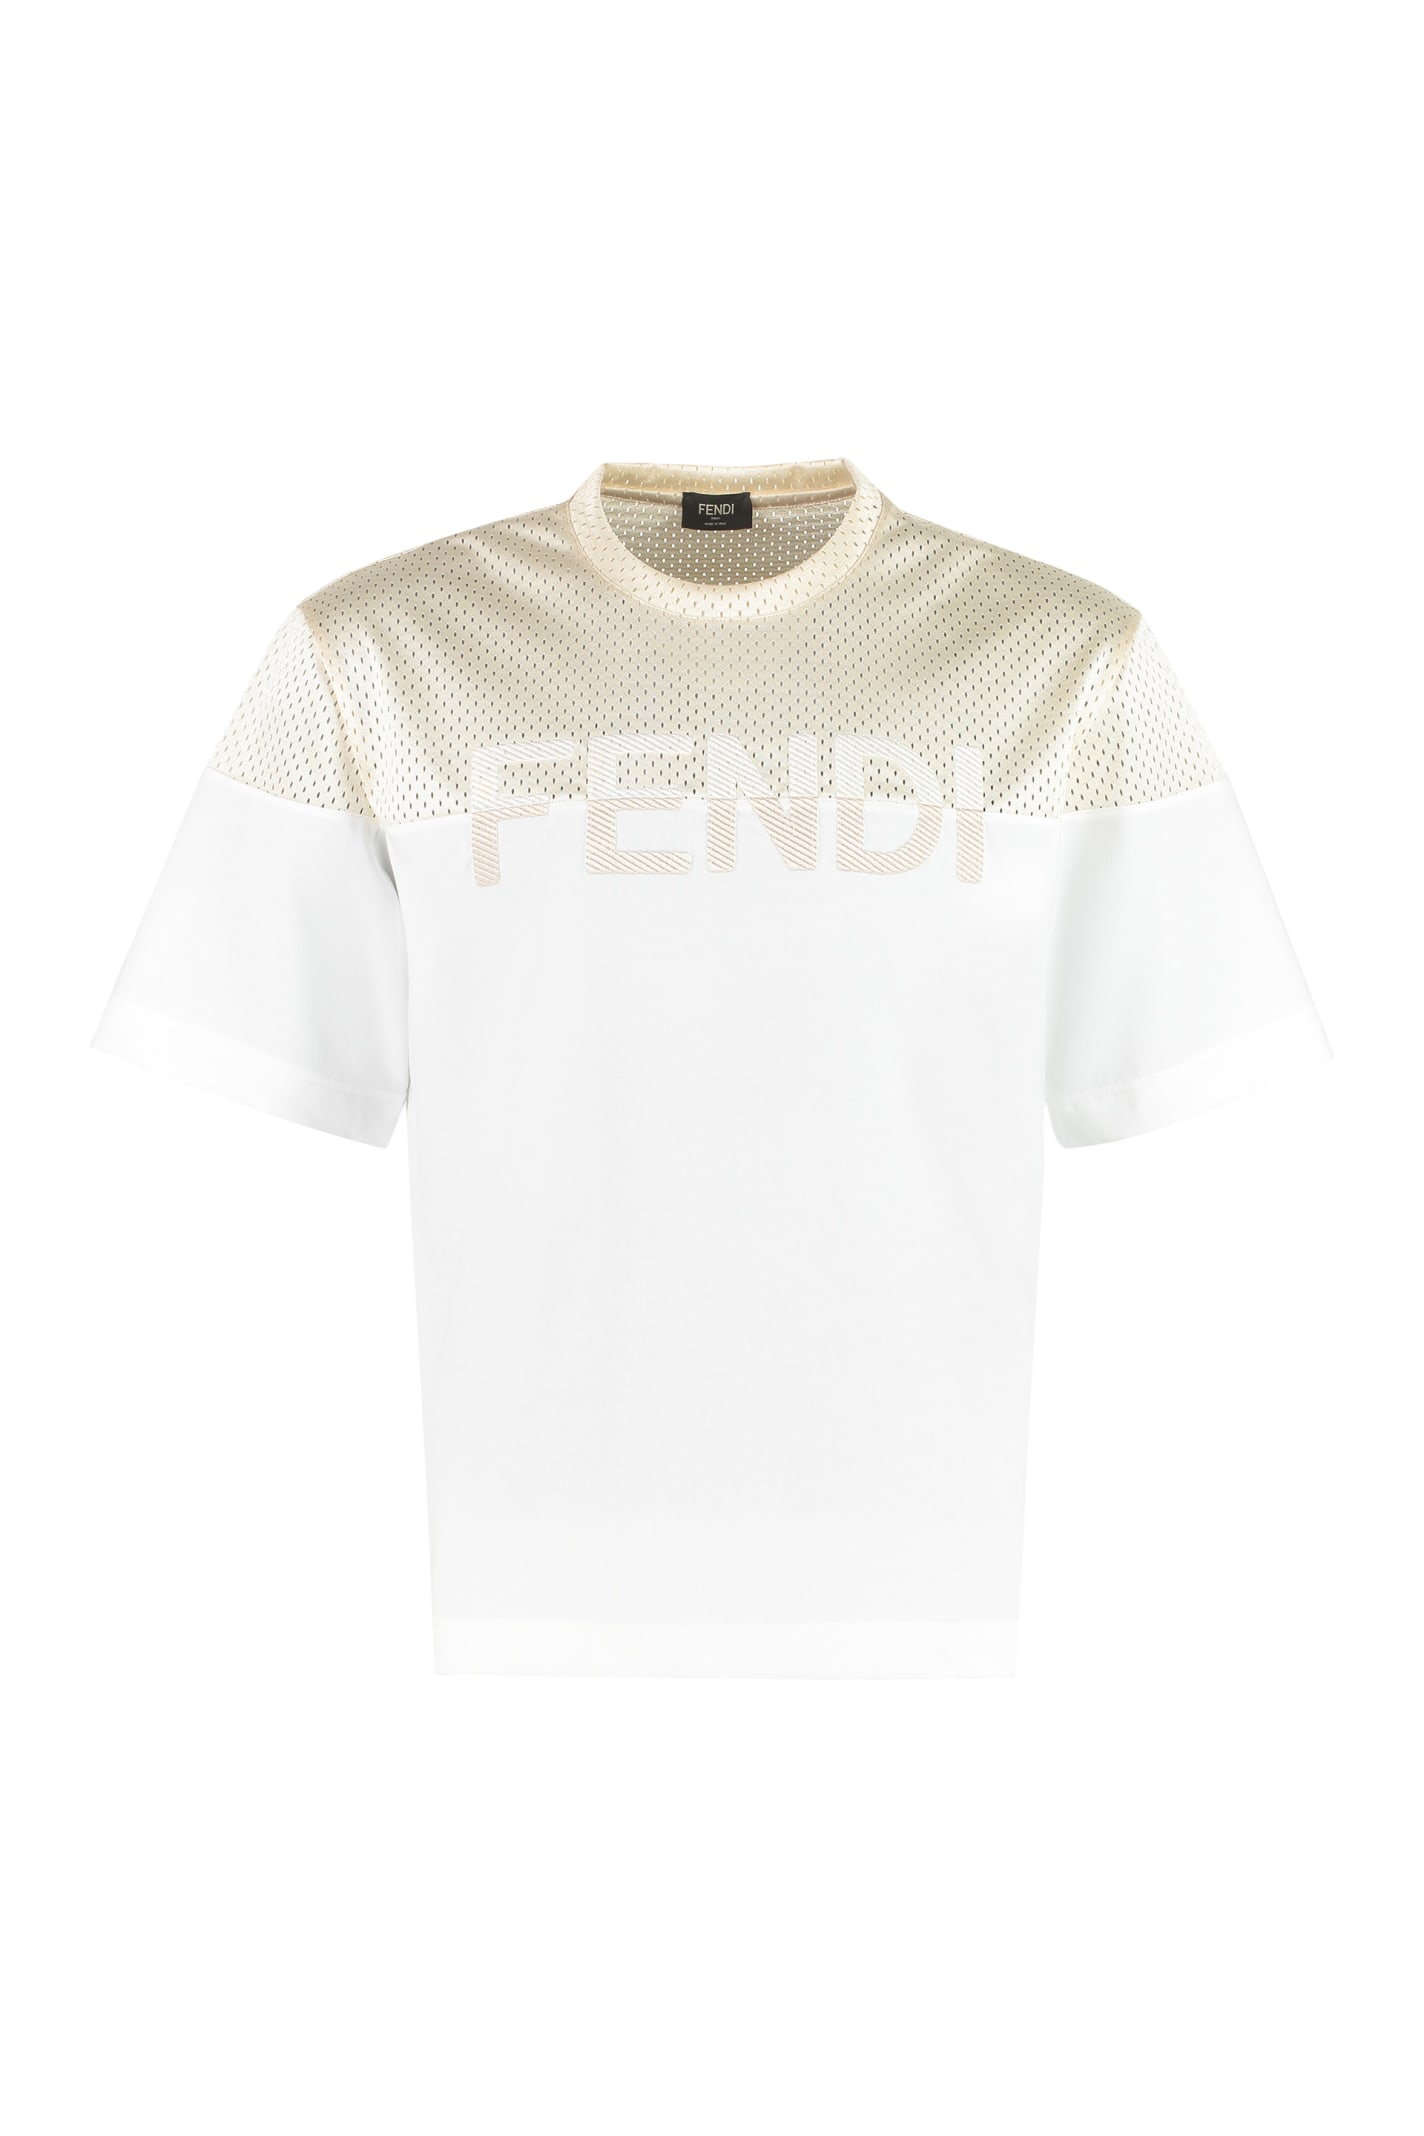 Fendi Two-tone Cotton T-shirt